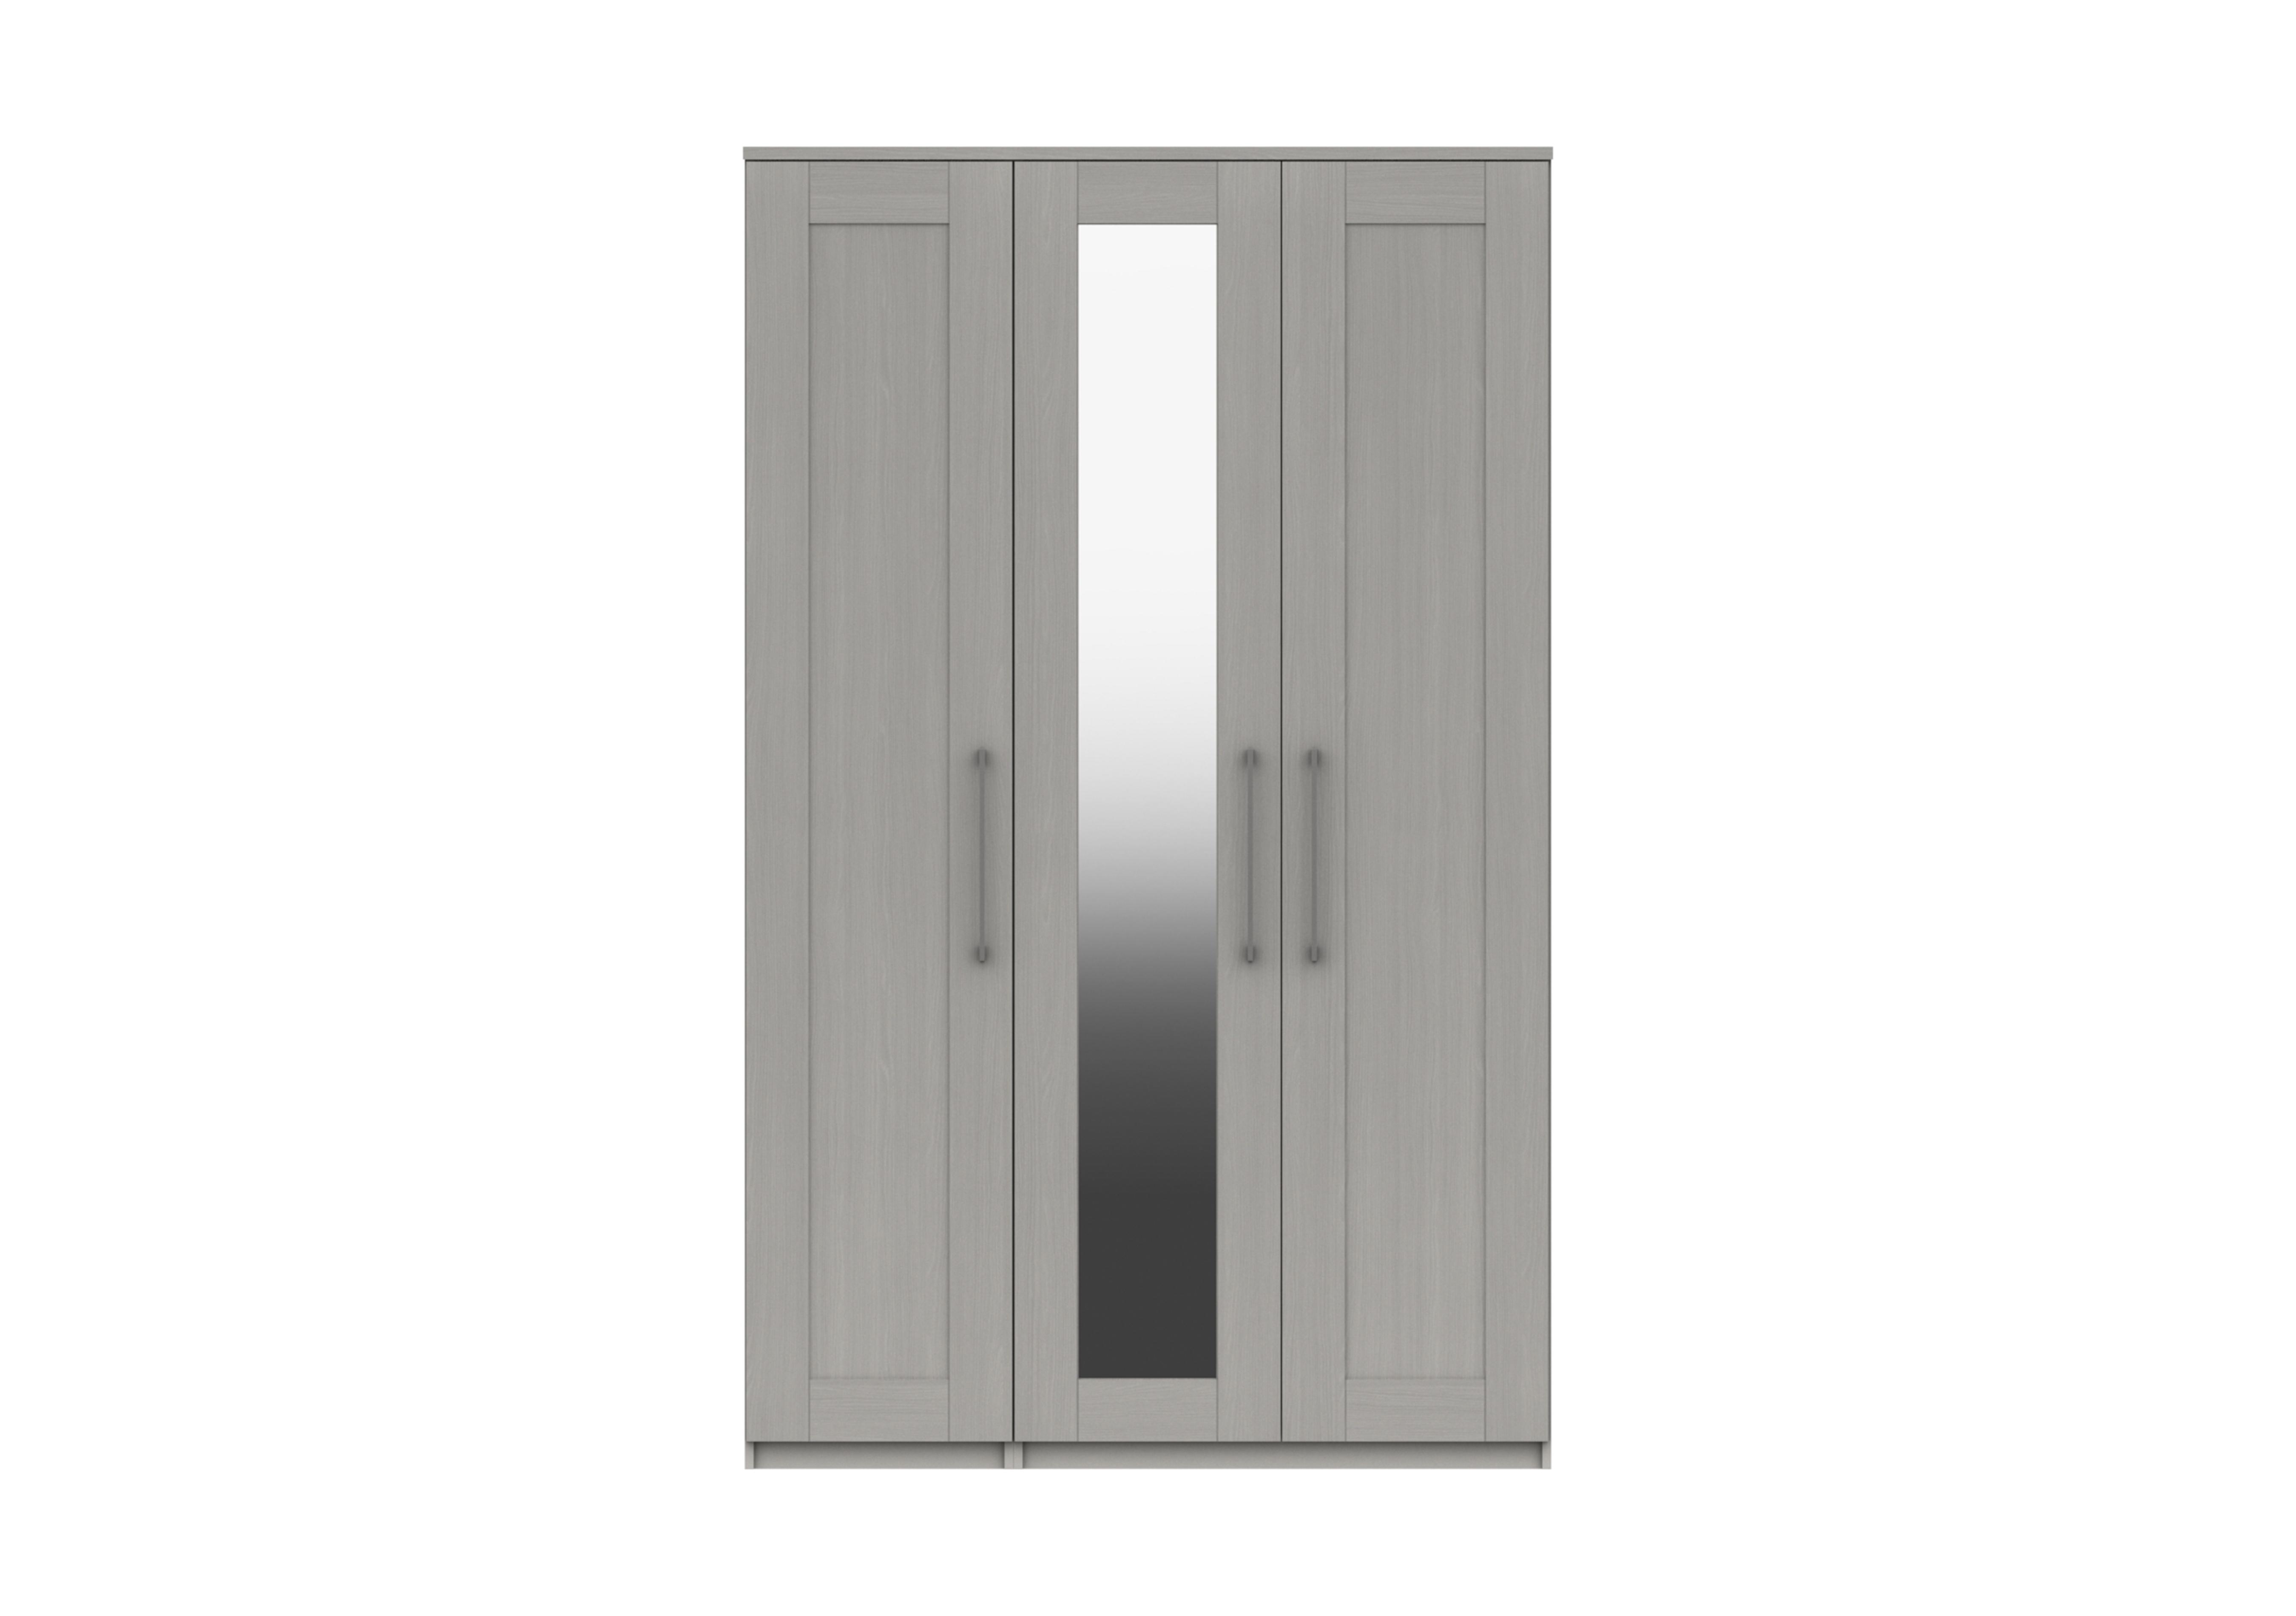 Fenchurch 3 Door Tall Wardrobe with Mirror in Light Grey on Furniture Village